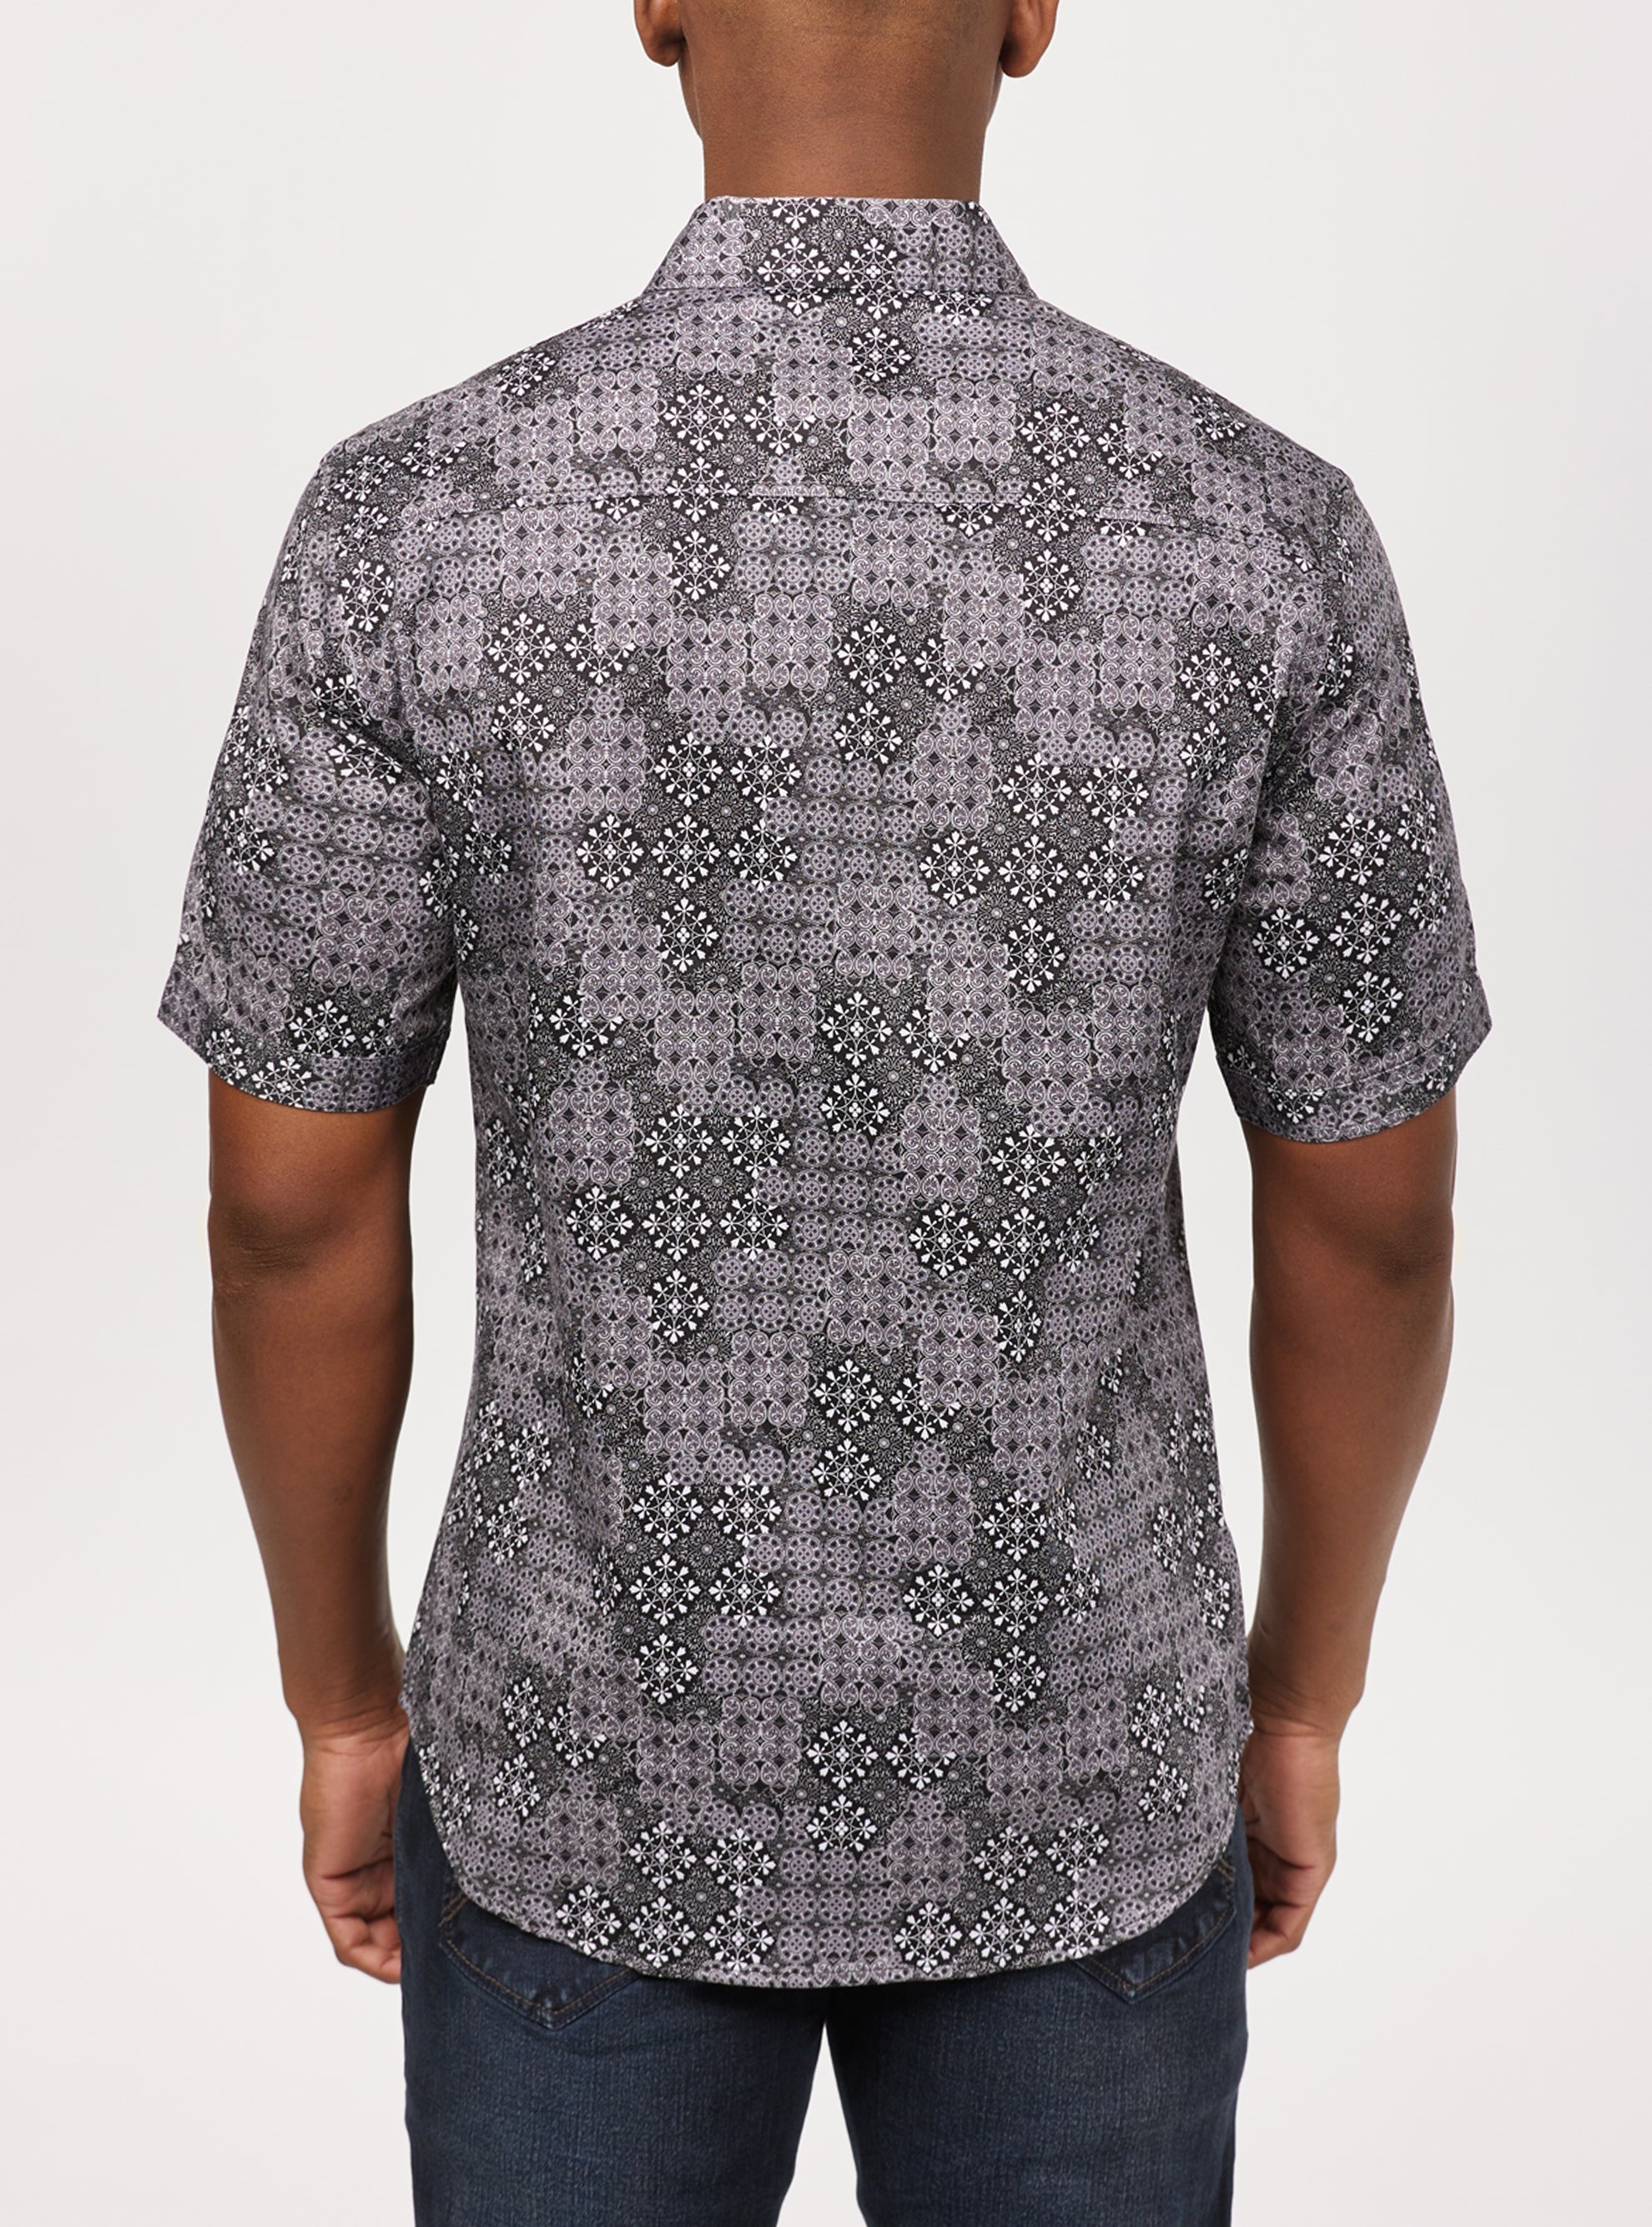 Multi Tiled Printed Shirts